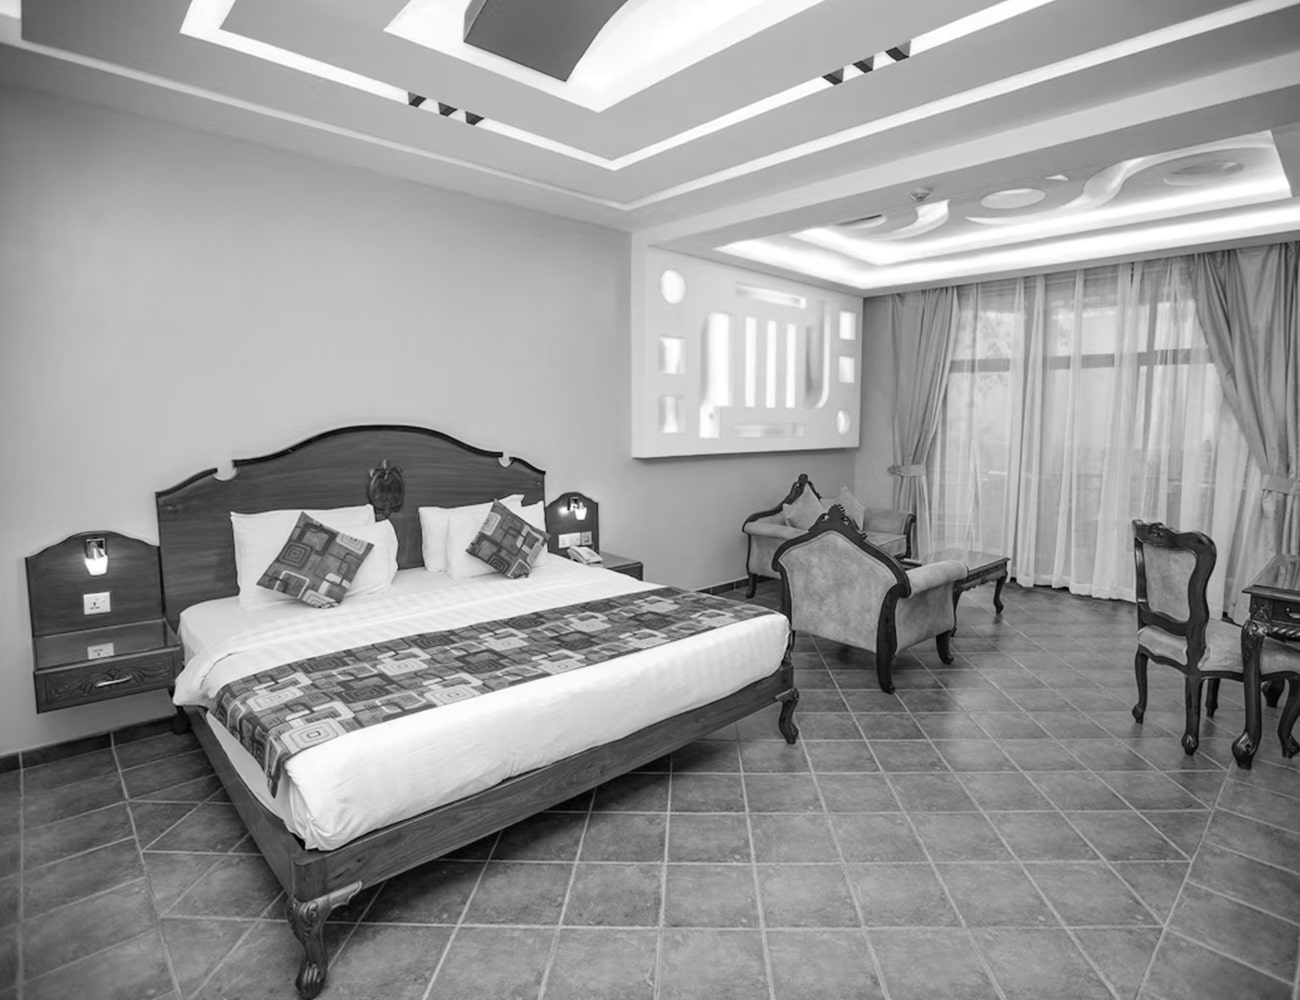 One Bedroom at Malakai Beach Resort, Mwanza